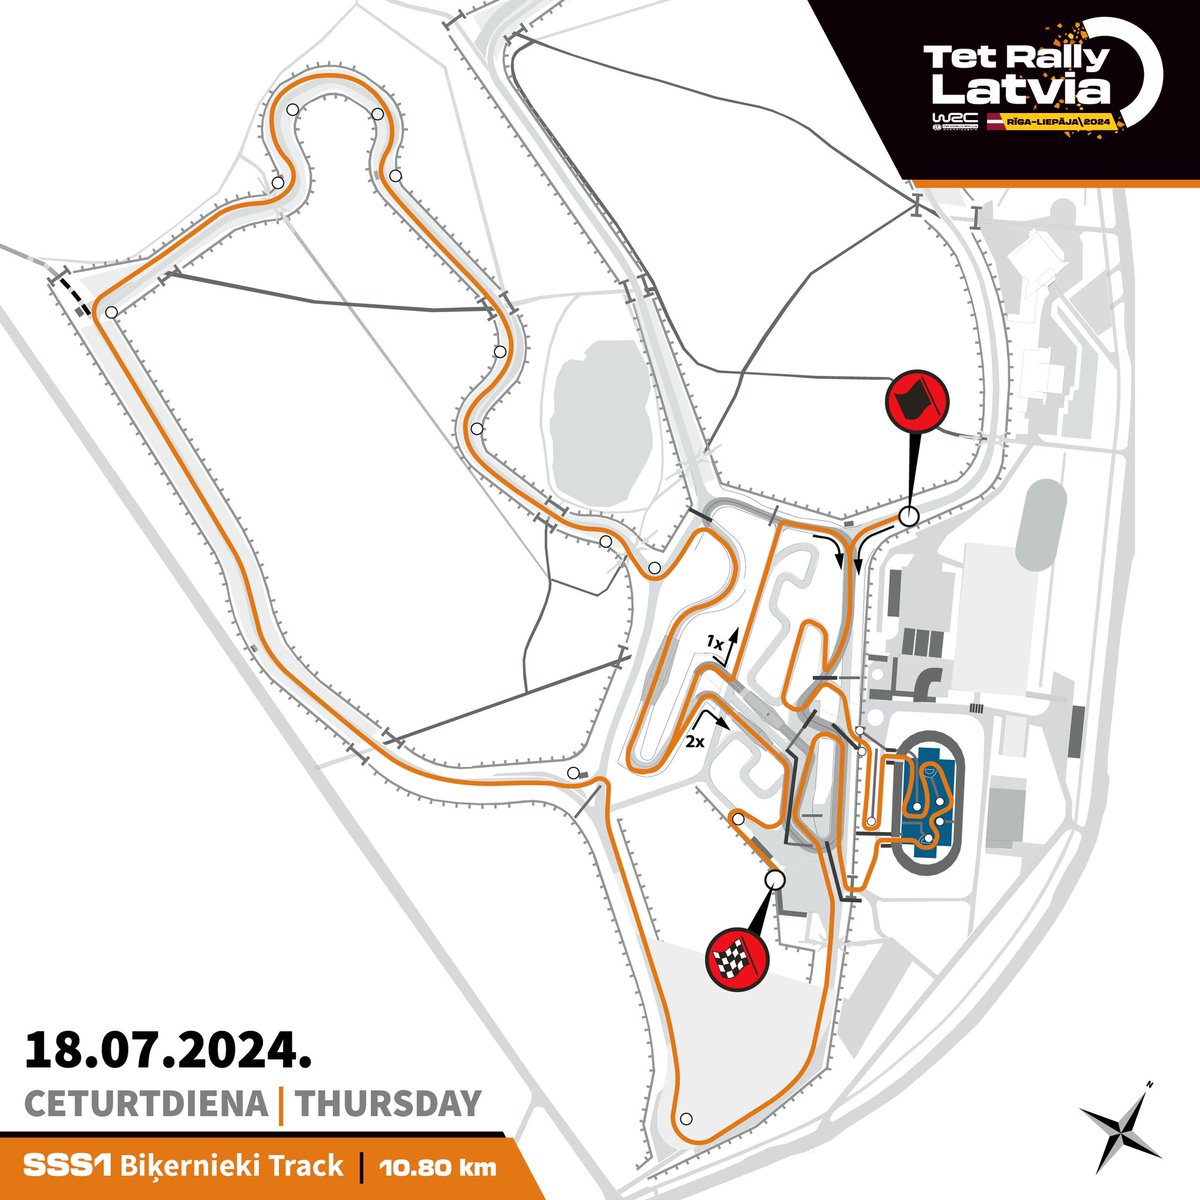 The route of SSS1 Biķernieki Track has been revealed! #TetRallyLatvia #WRC @OfficialWRC